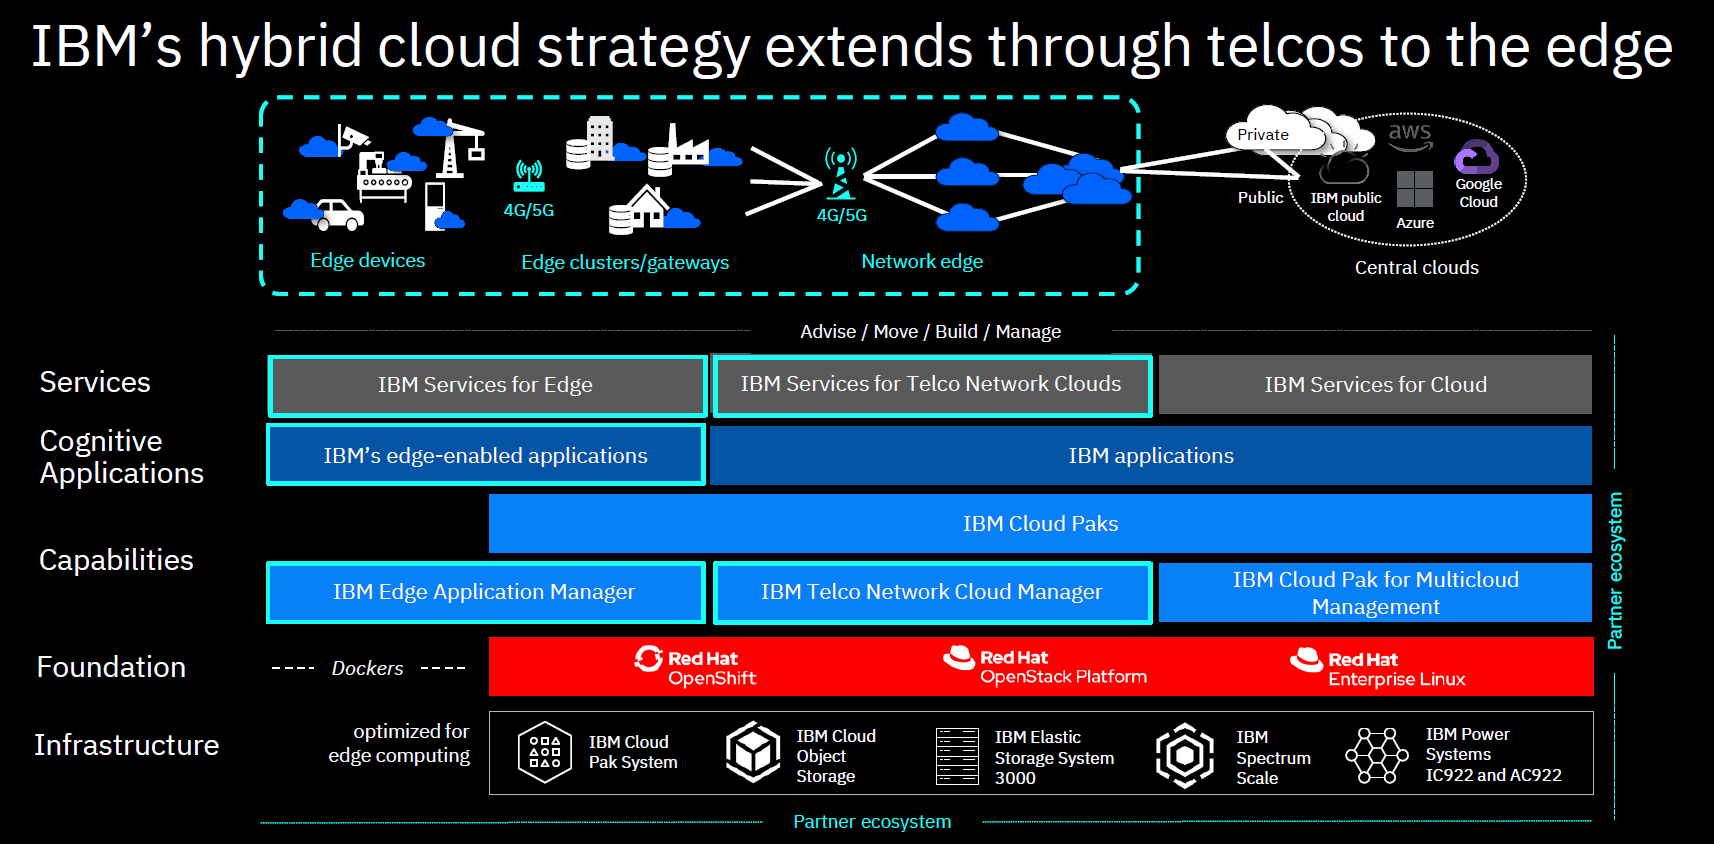 IBM Cross-Platform Cloud Campaign Takes On  Services 11/08/2013